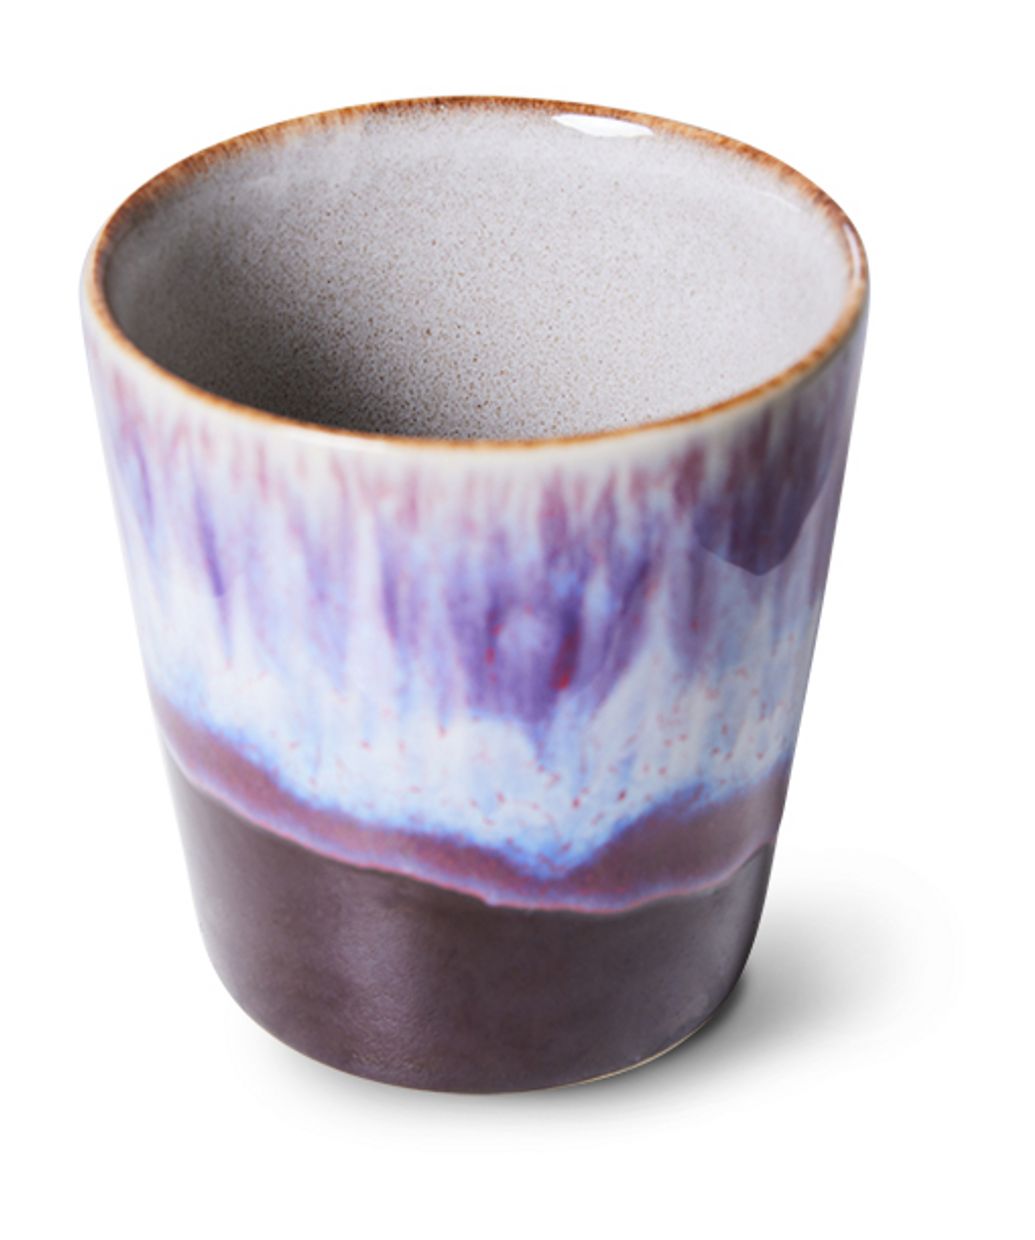 70s ceramics: coffee mug, Yeti